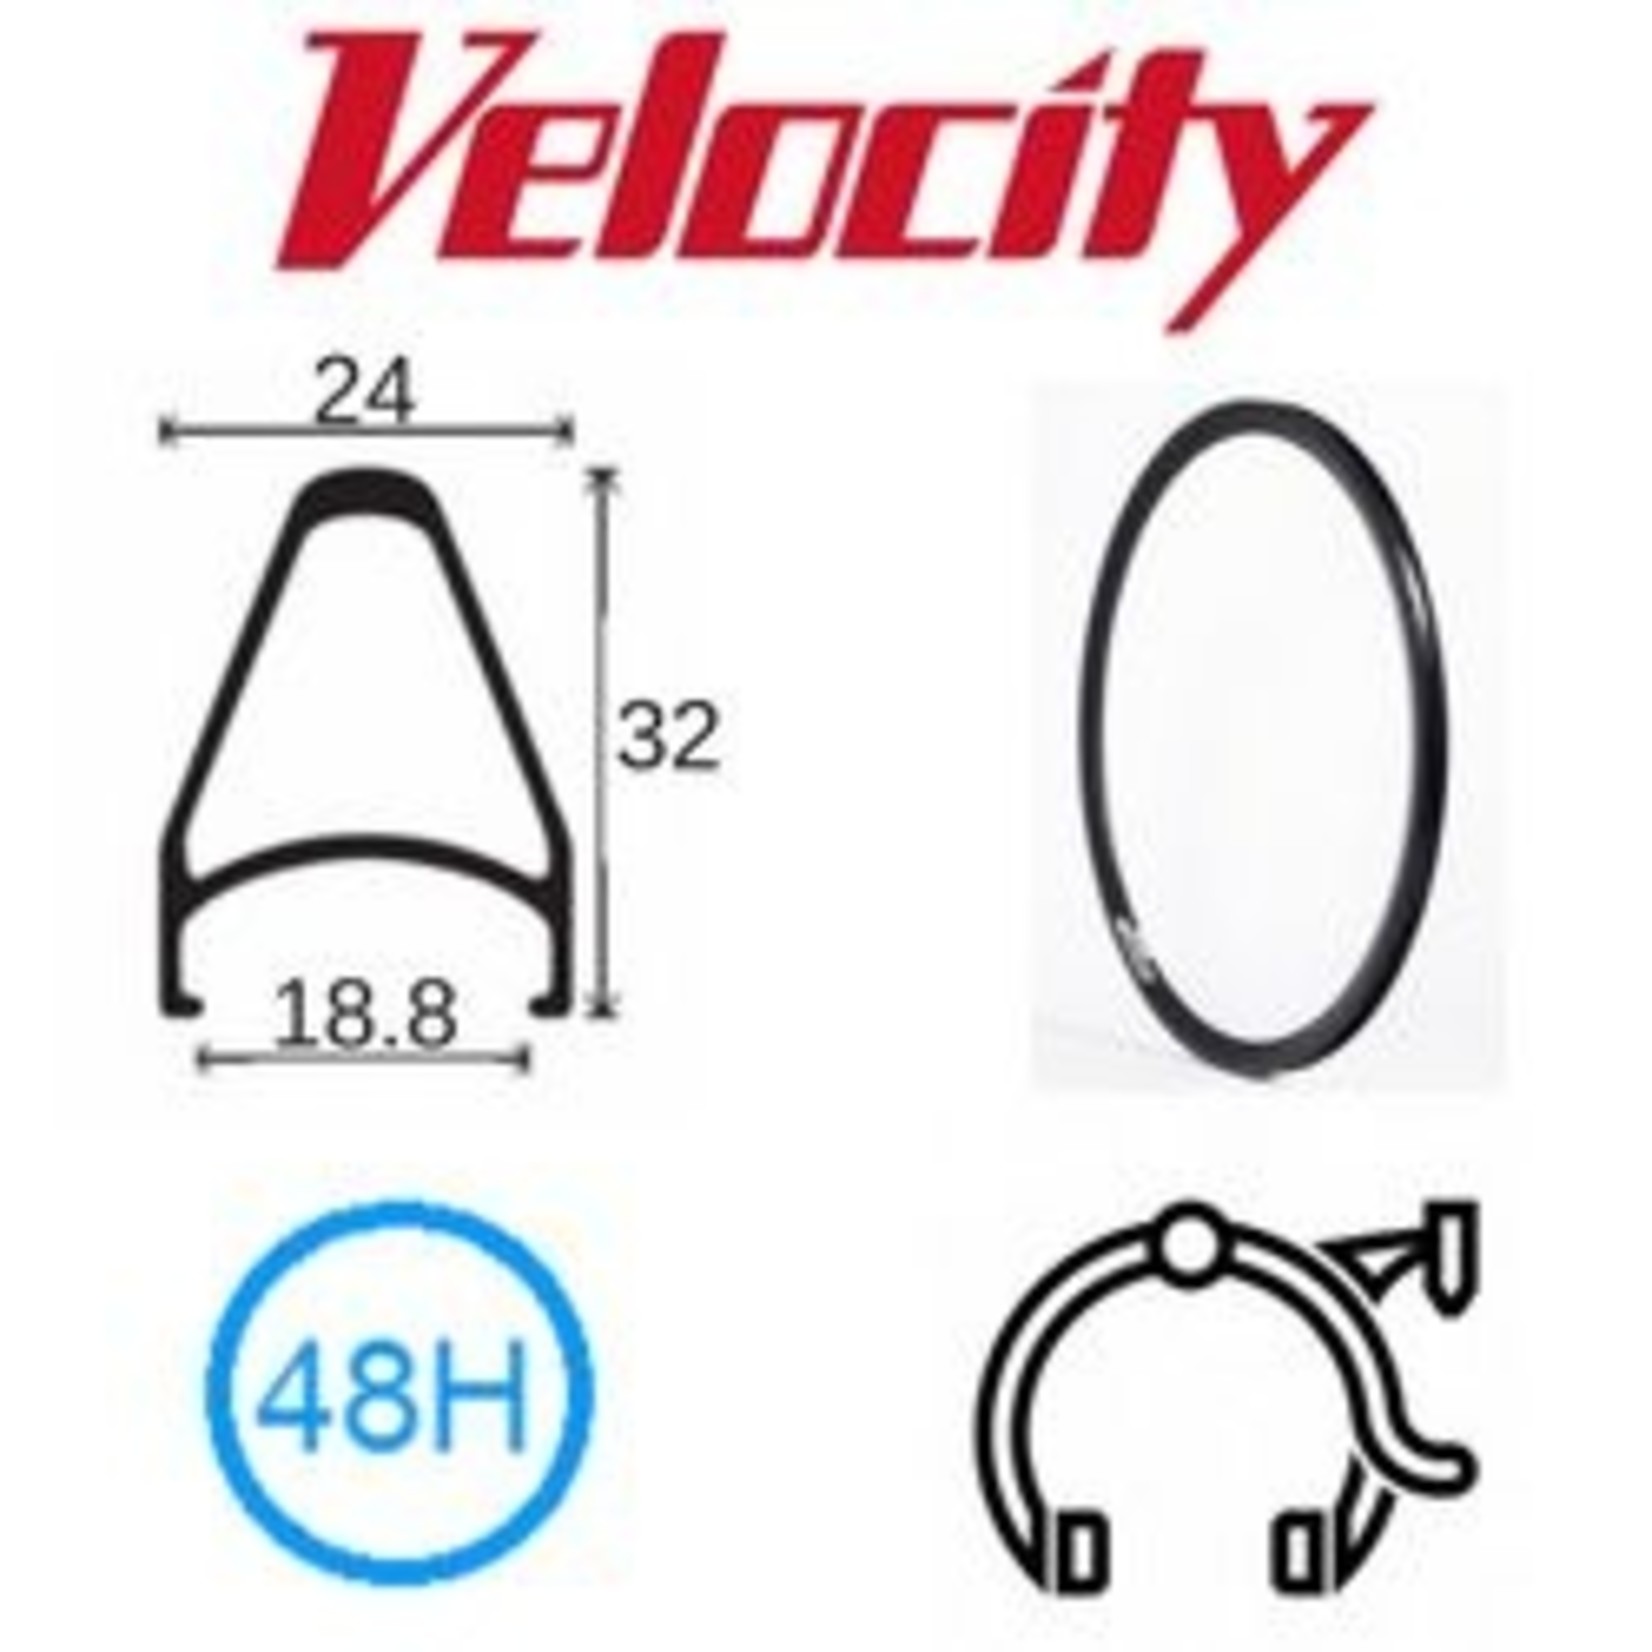 velocity Velocity Rim - Chukker 26"(559) 48H Ano - Presta Valve - Rim Brake - D/W - Black